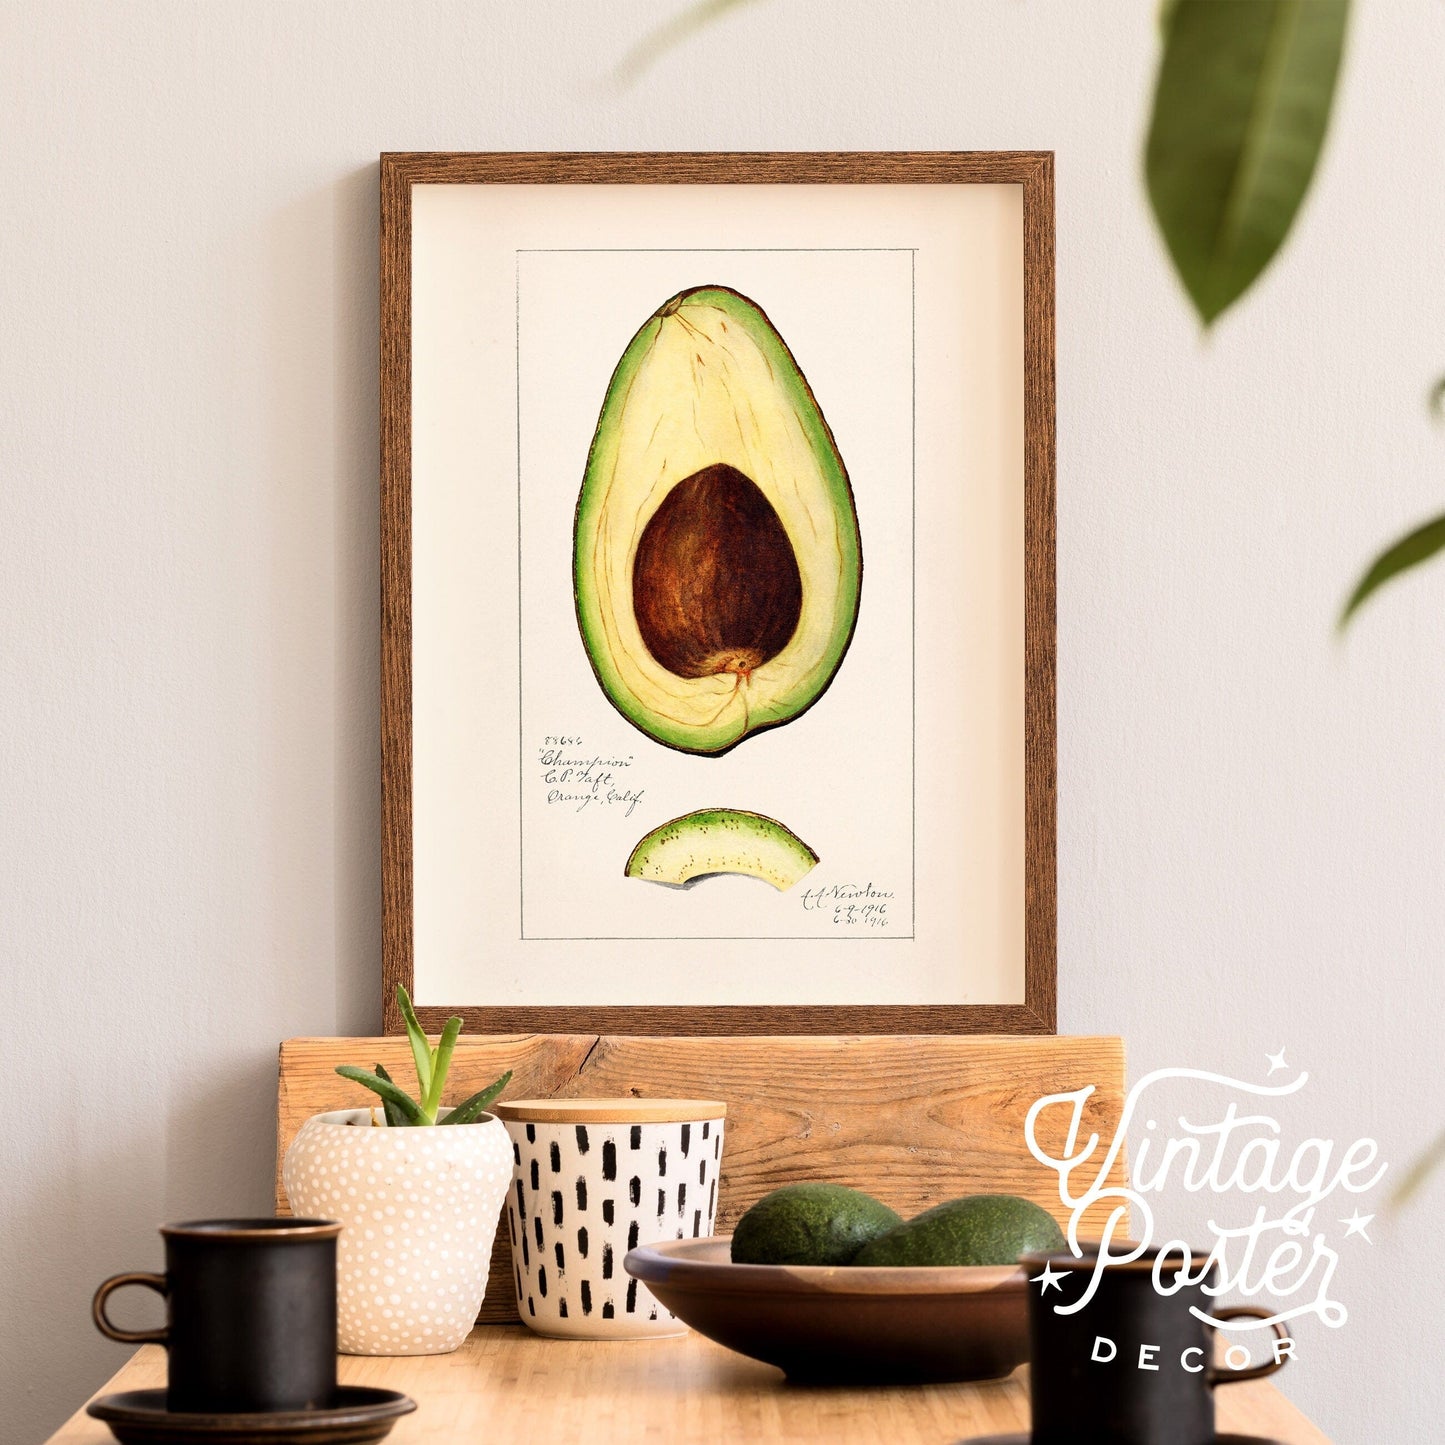 Home Poster Decor Avocado Print, Vintage Avocado Poster, Botanical Fruit, Vintage Kitchen, Minimalist Decor, Tropical fruit, High Quality Paper up to 24"x36"